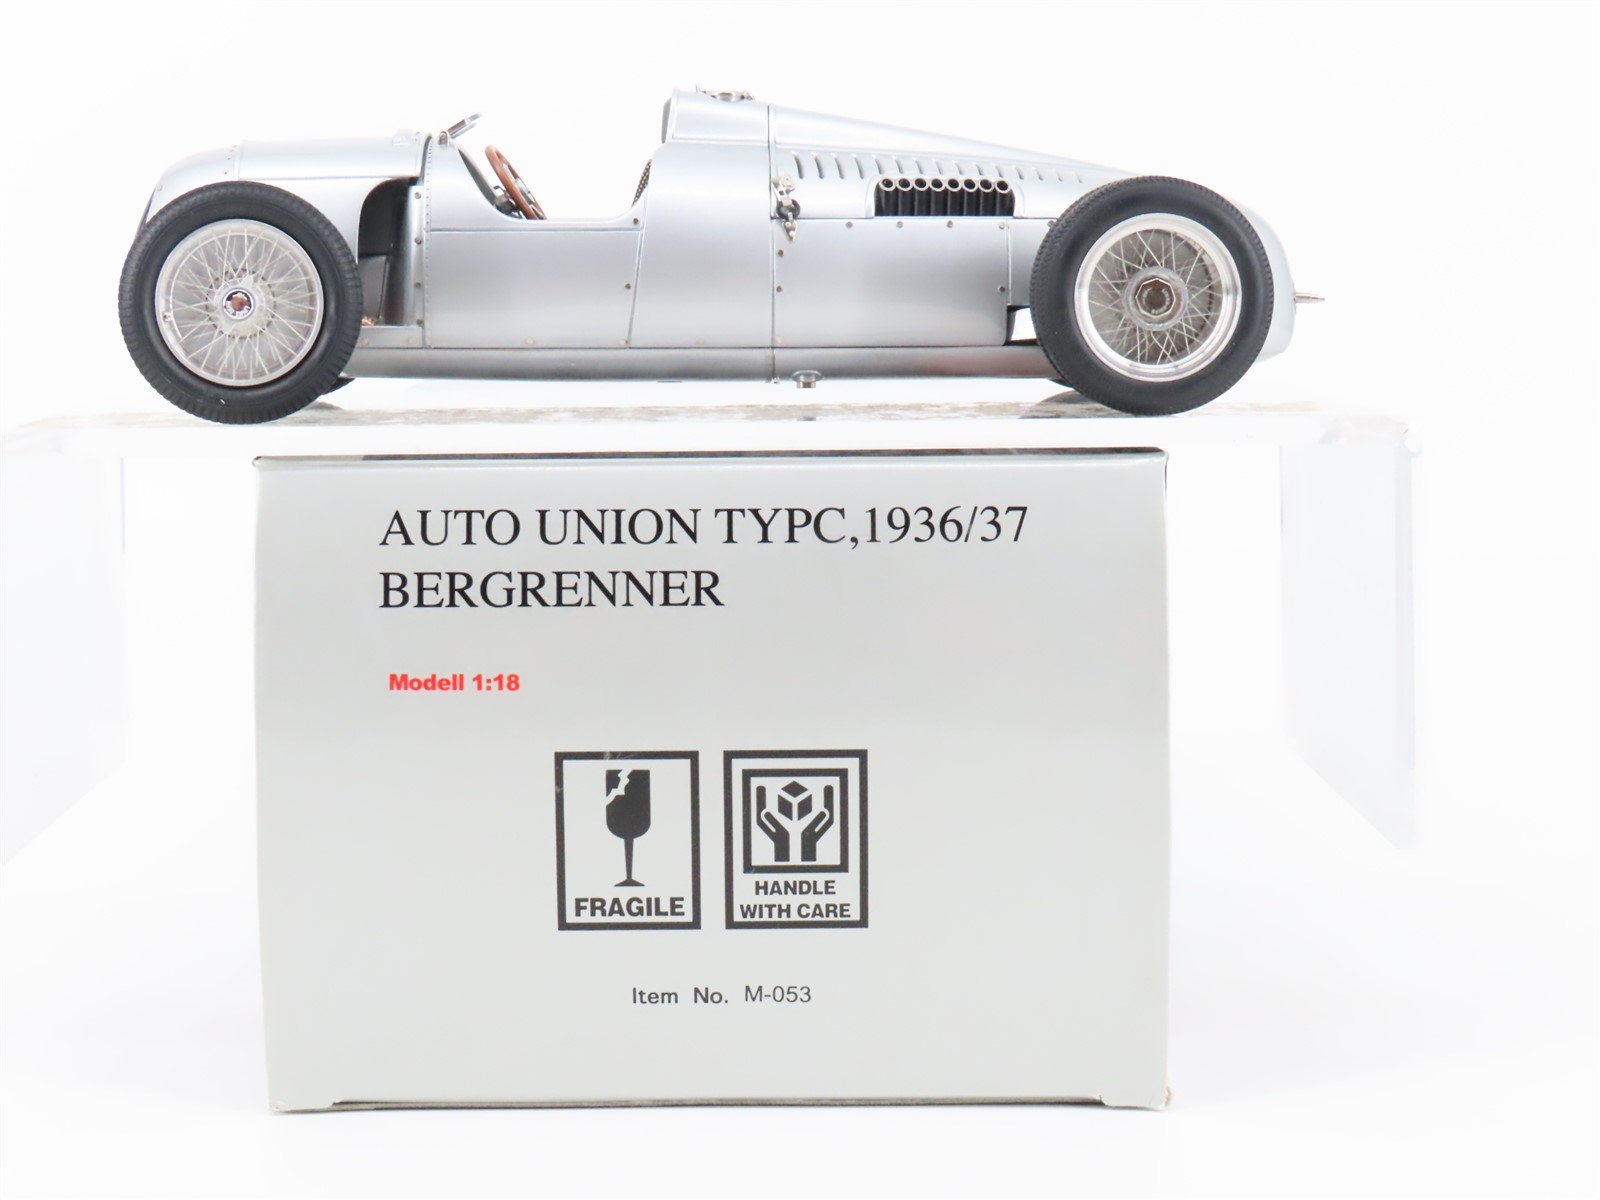 1:18 Scale CMC Die-Cast M-053 1936/37 Auto Union TypC Bergrenner